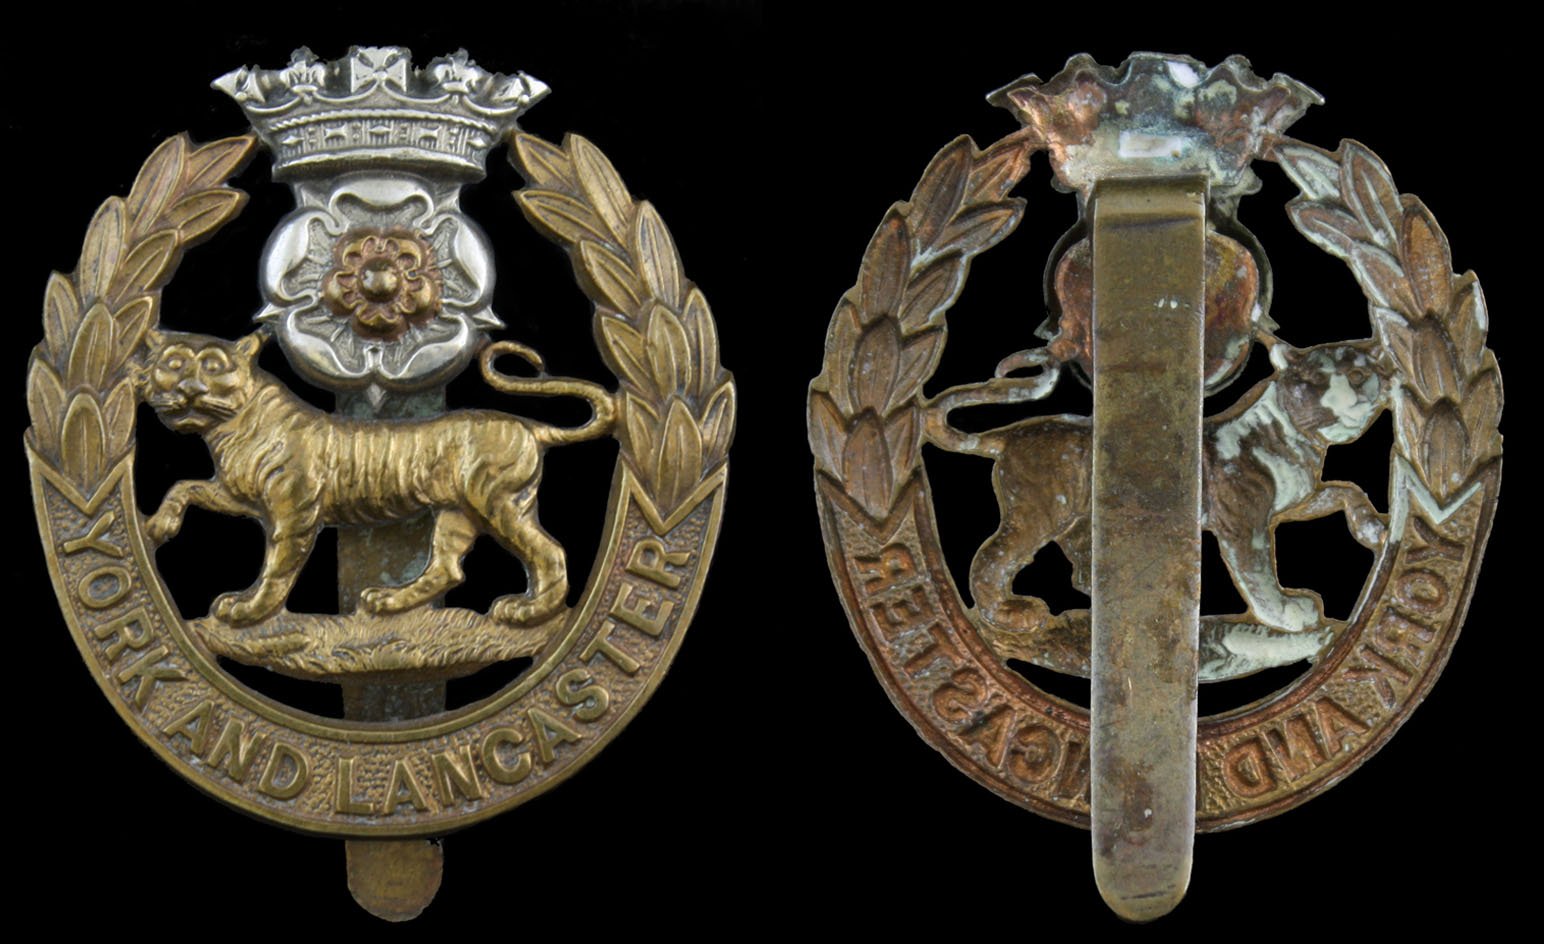 Other Ranks Badge 1903 Onwards